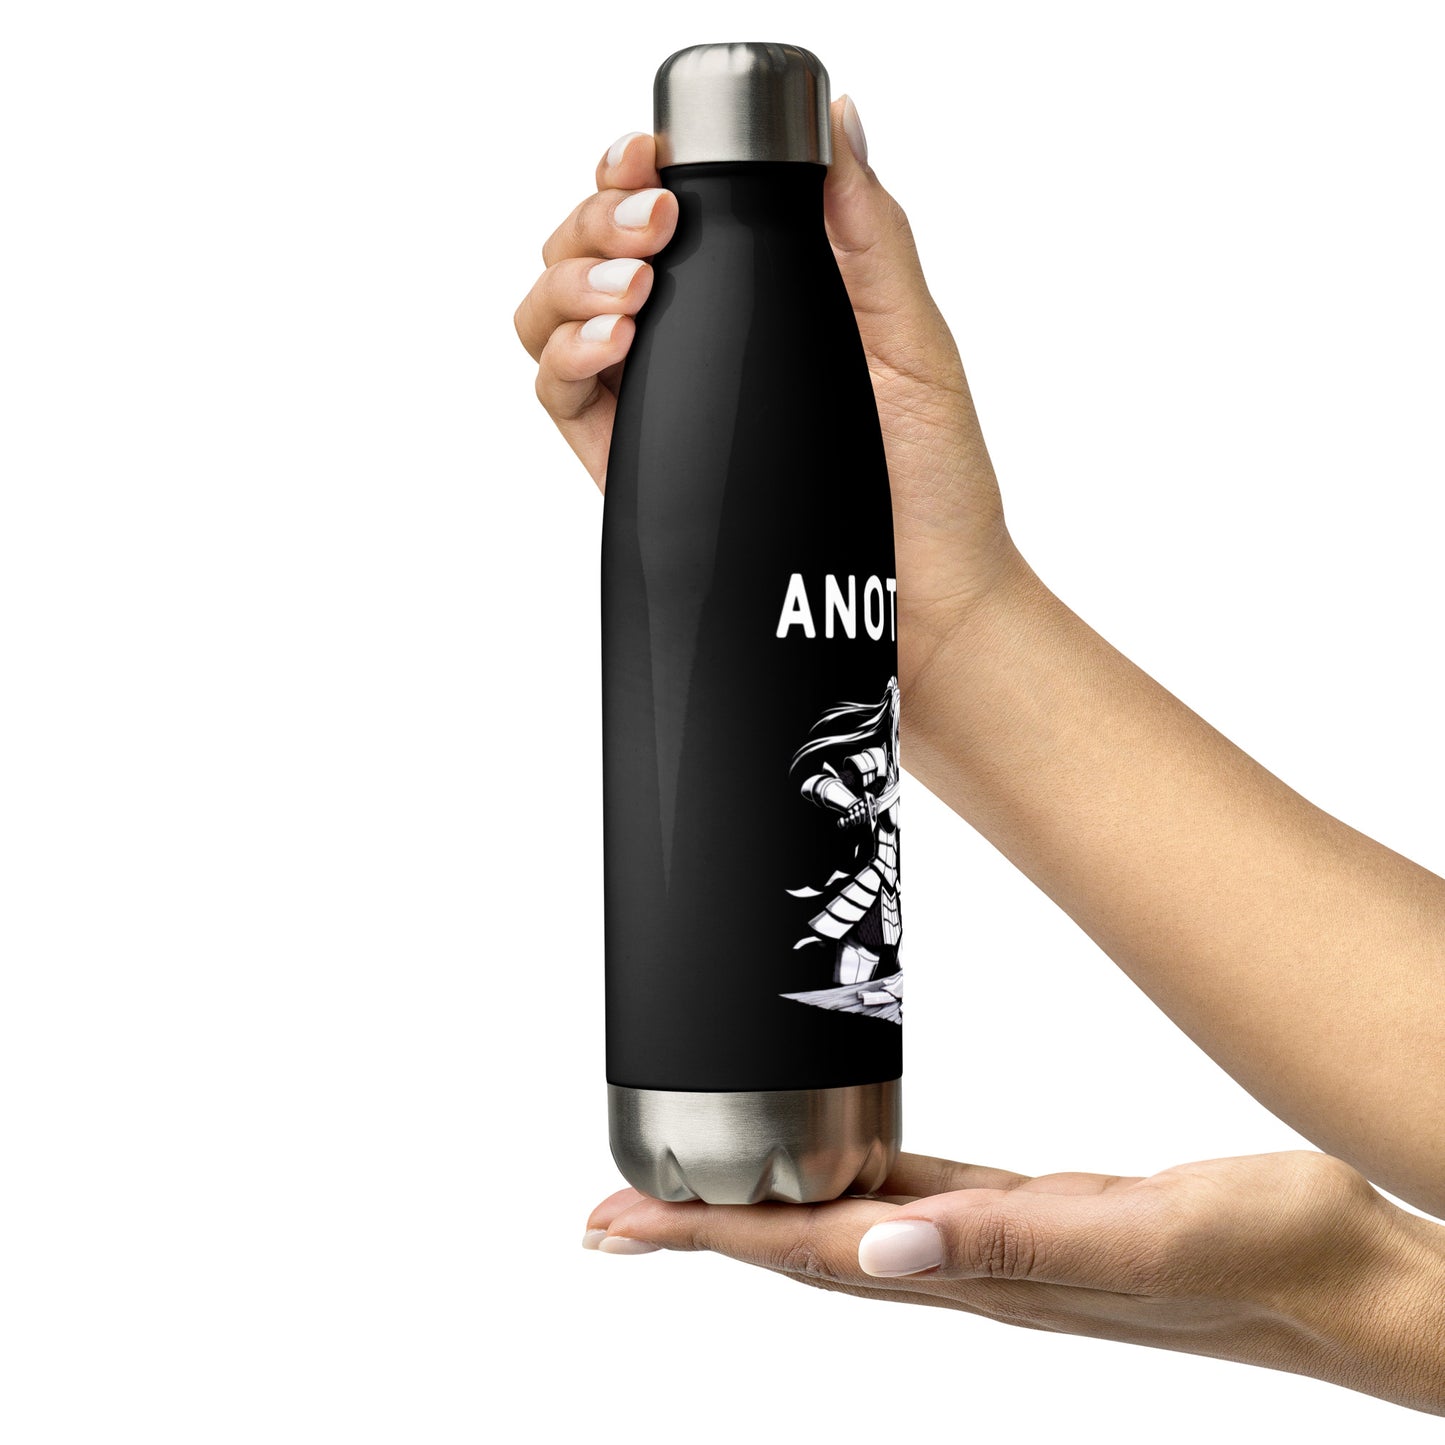 Task Slayerz #4 -Stainless steel water bottle